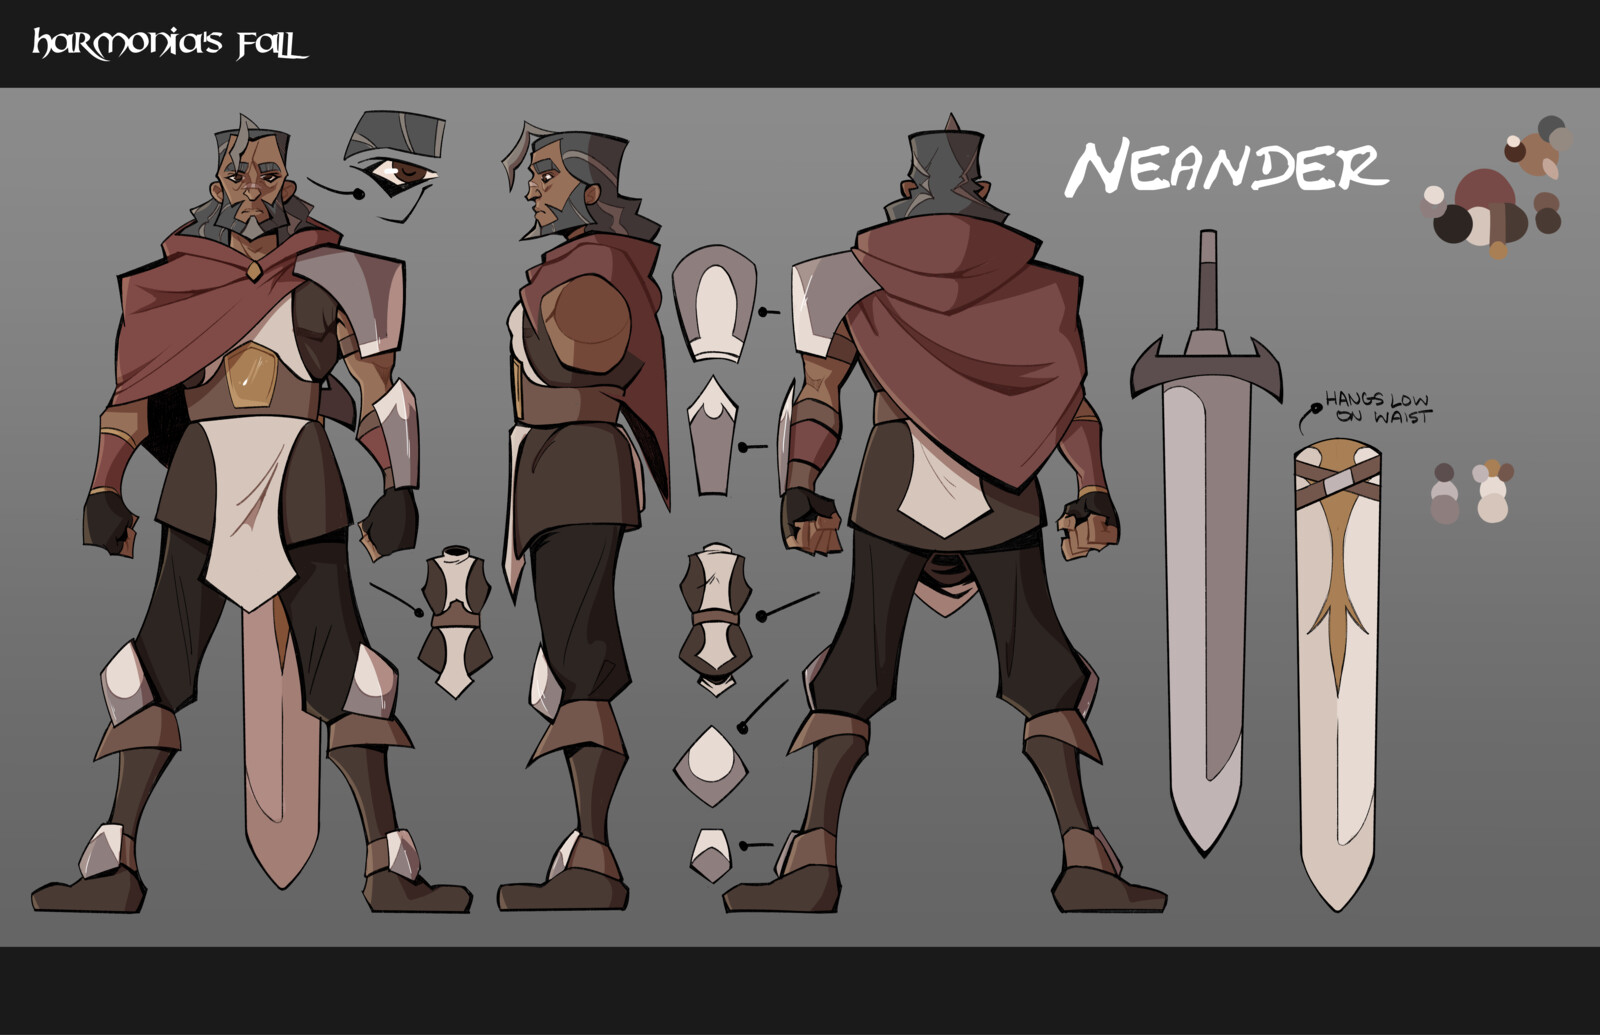 Harmonia's Fall - Neander Character Sheet